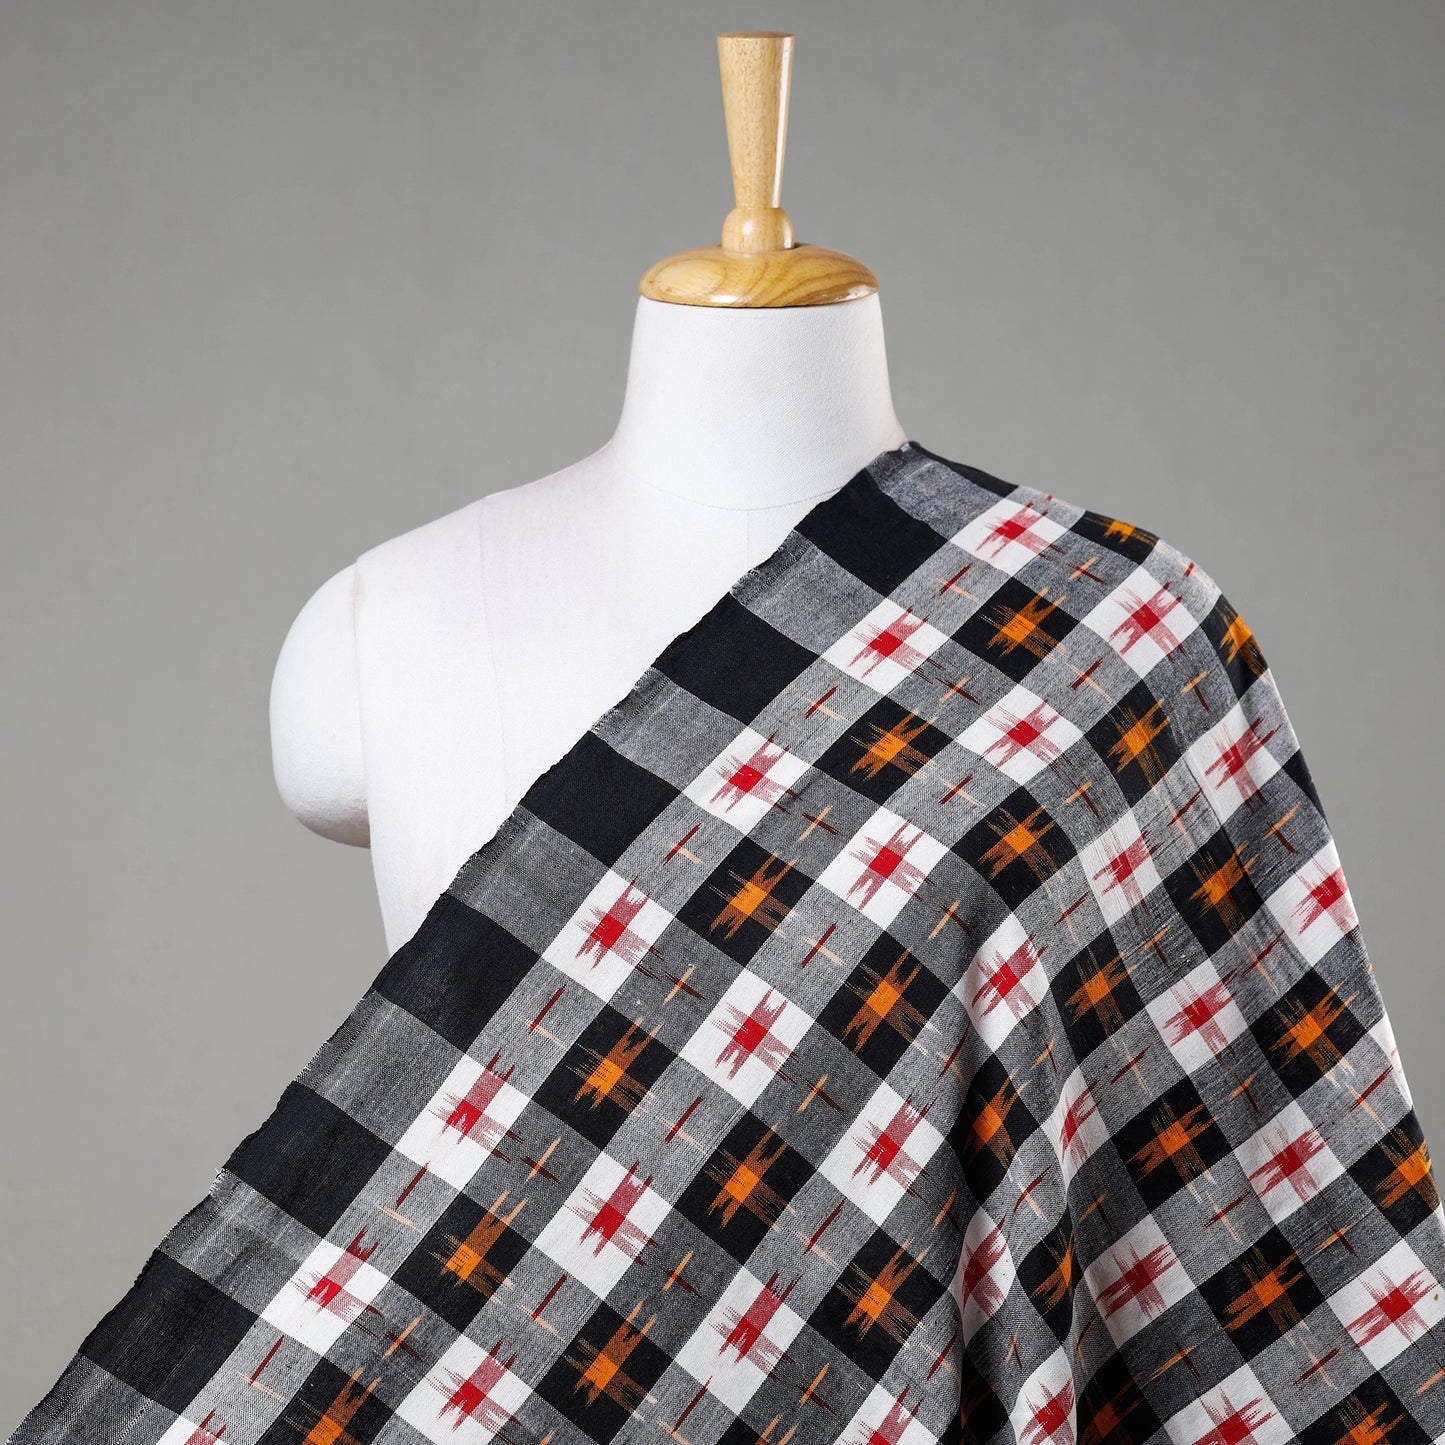 Black & White Checkered Pochampally Double Ikat Handloom Cotton Fabric